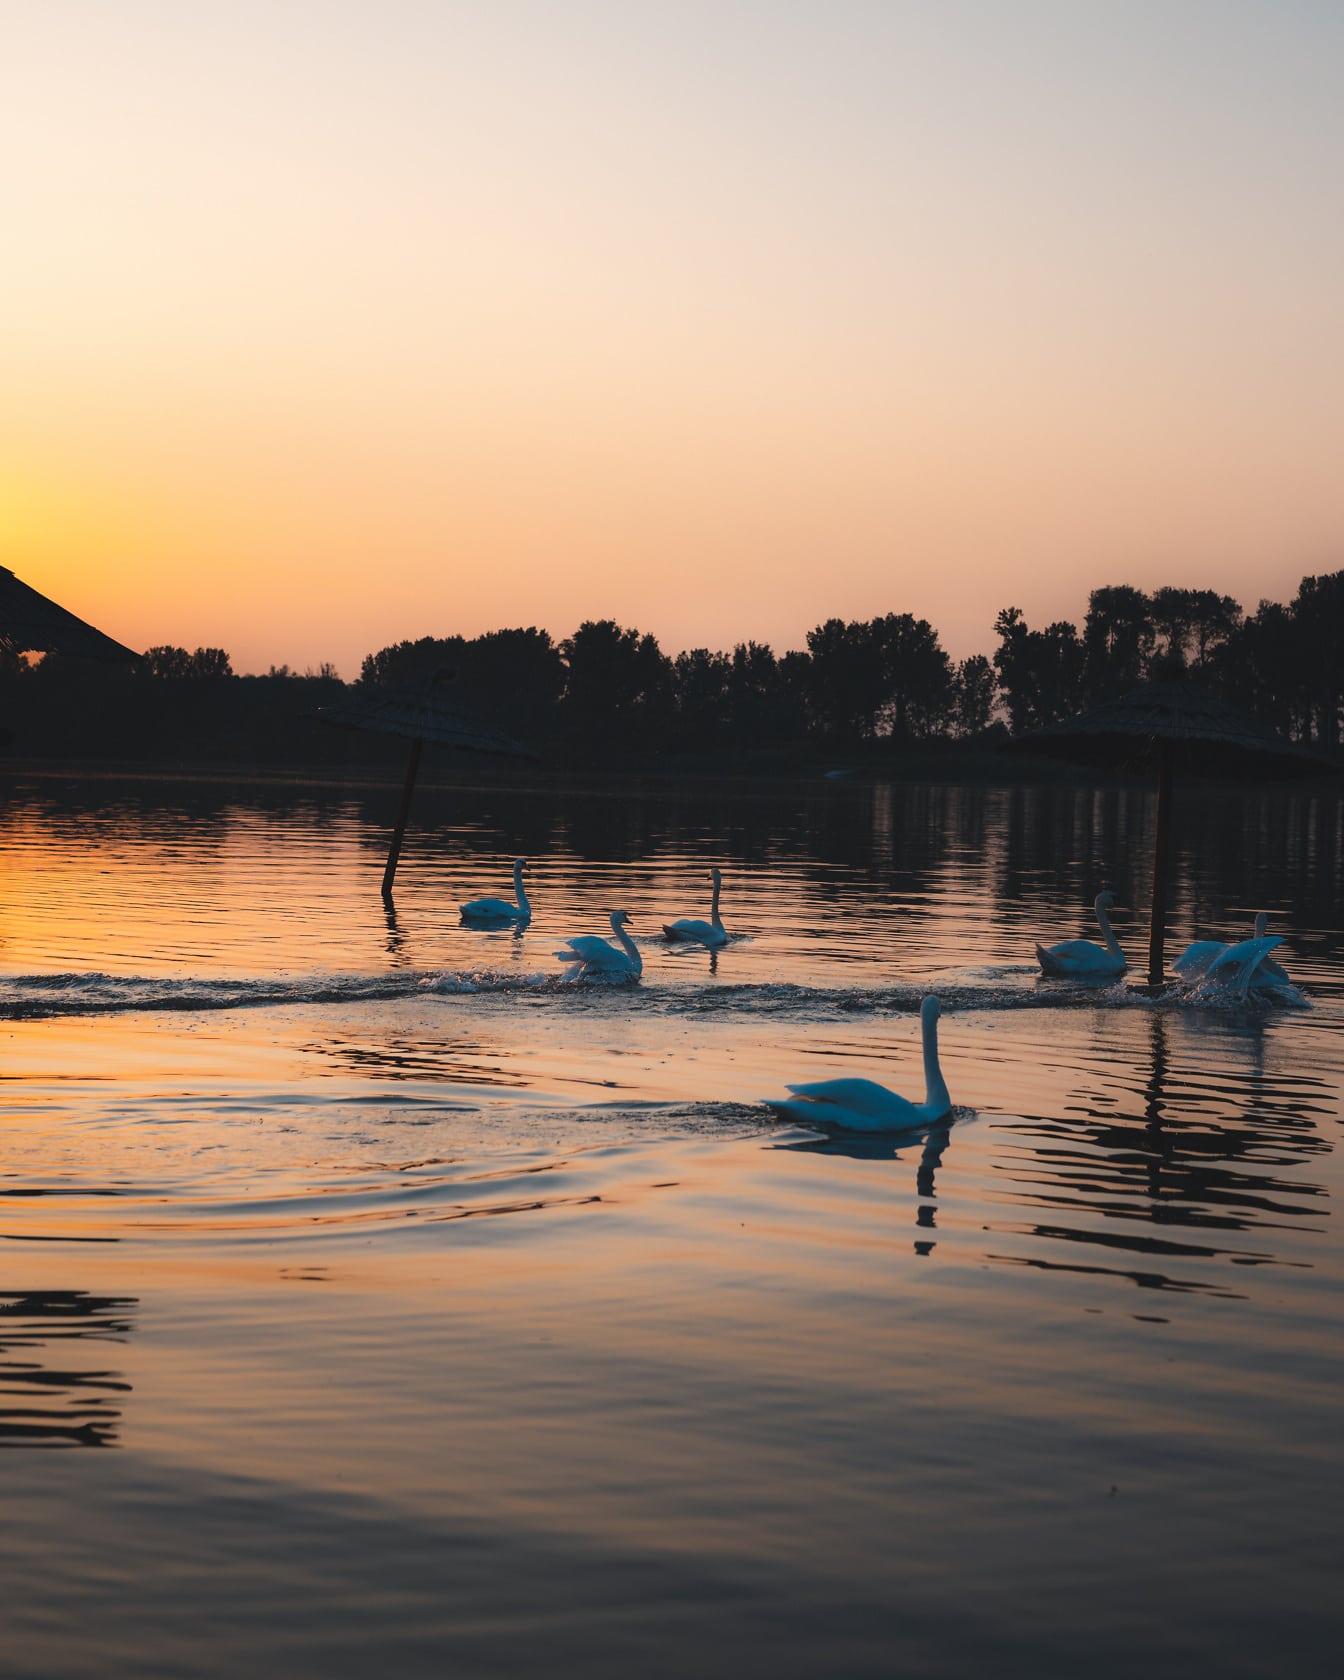 Matahari terbit di tepi danau dengan kawanan burung angsa berenang